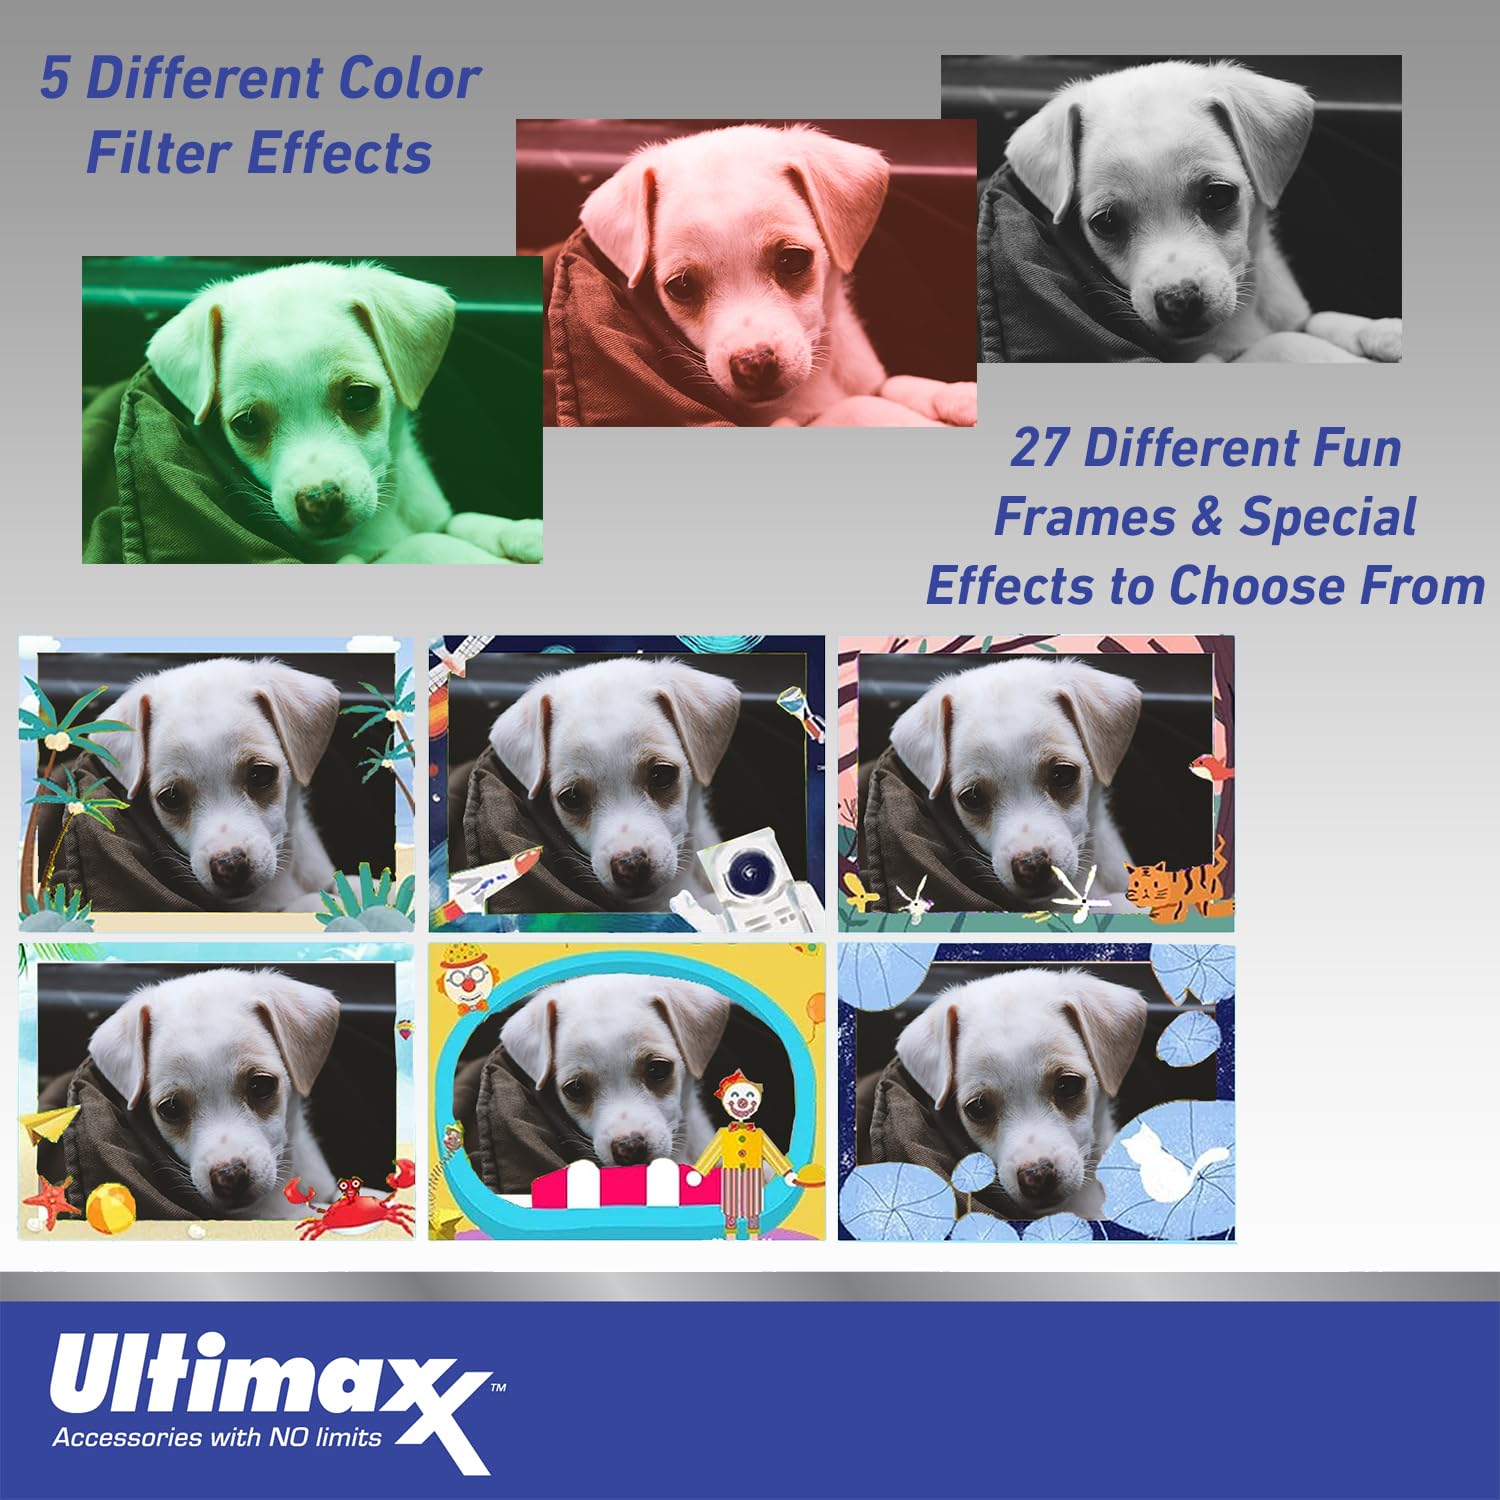 Ultimaxx Essential Kid’s Digital Camera Bundle (Blue) - Includes: 32GB microSD Card, High-Speed Memory Card Reader with Internal microSD Slot, Lanyard, Microfiber Cloth & More (6pc Bundle)